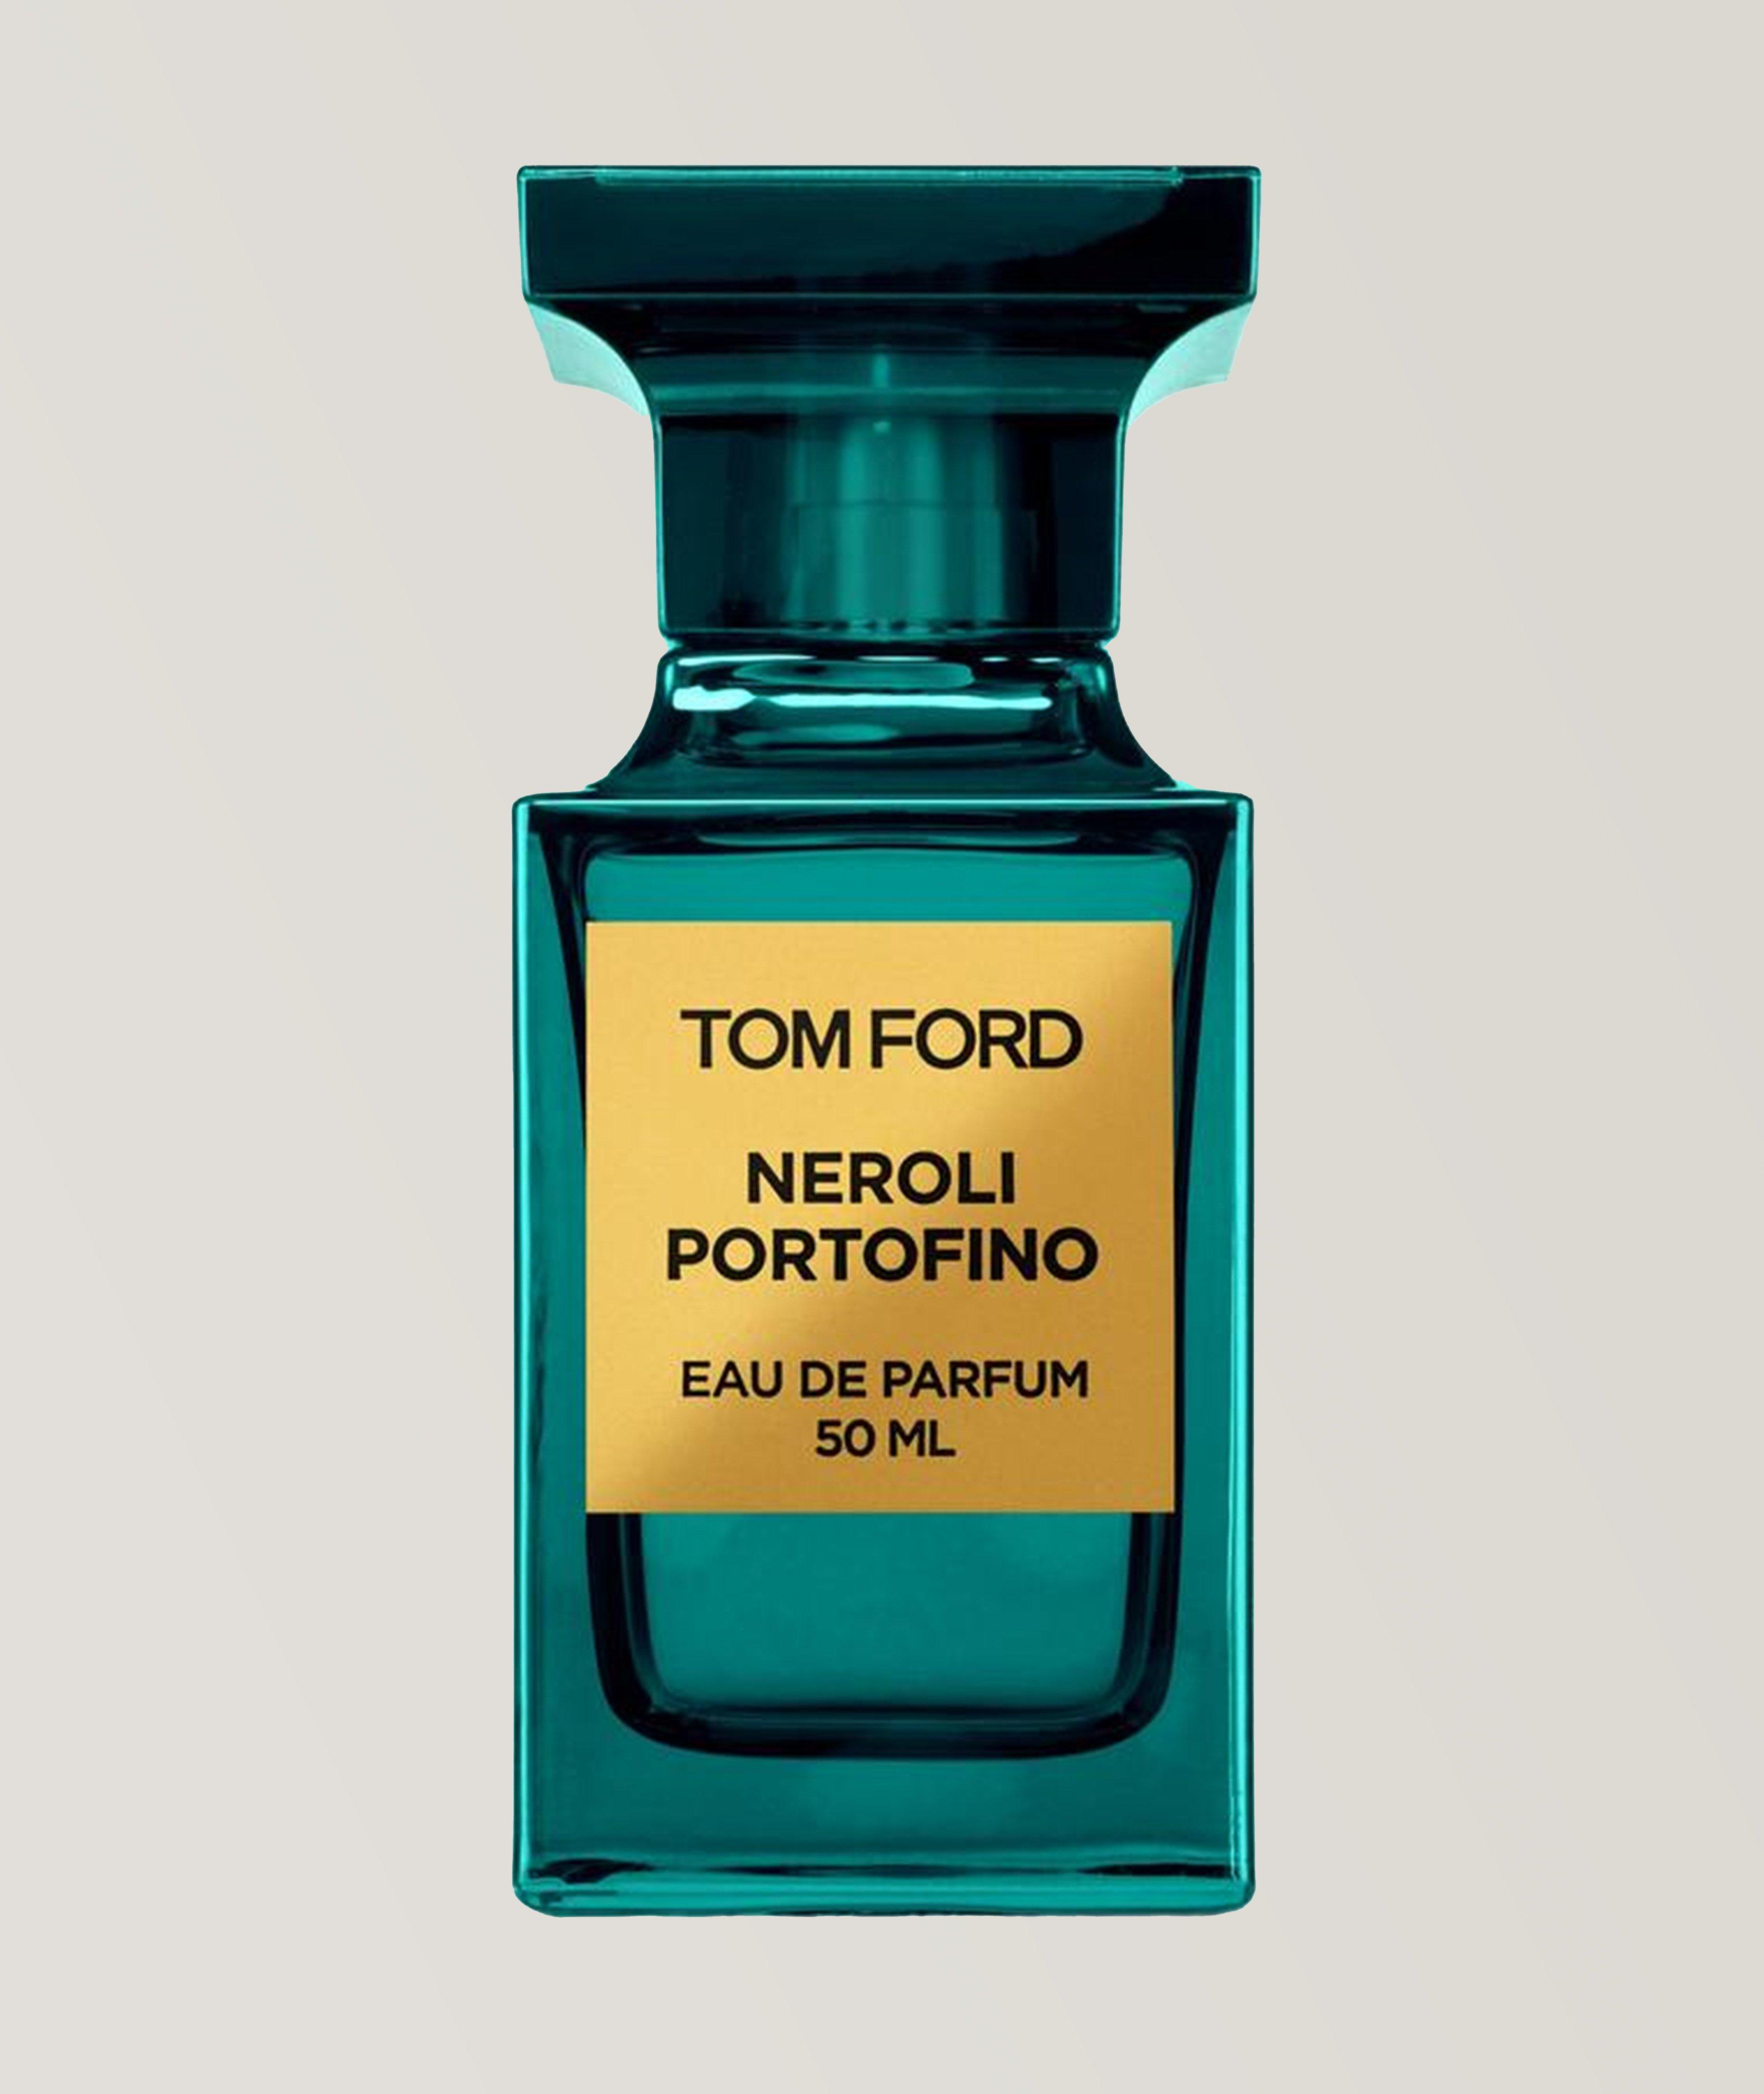 TOM FORD Eau de parfum Neroli Portofino 50ml